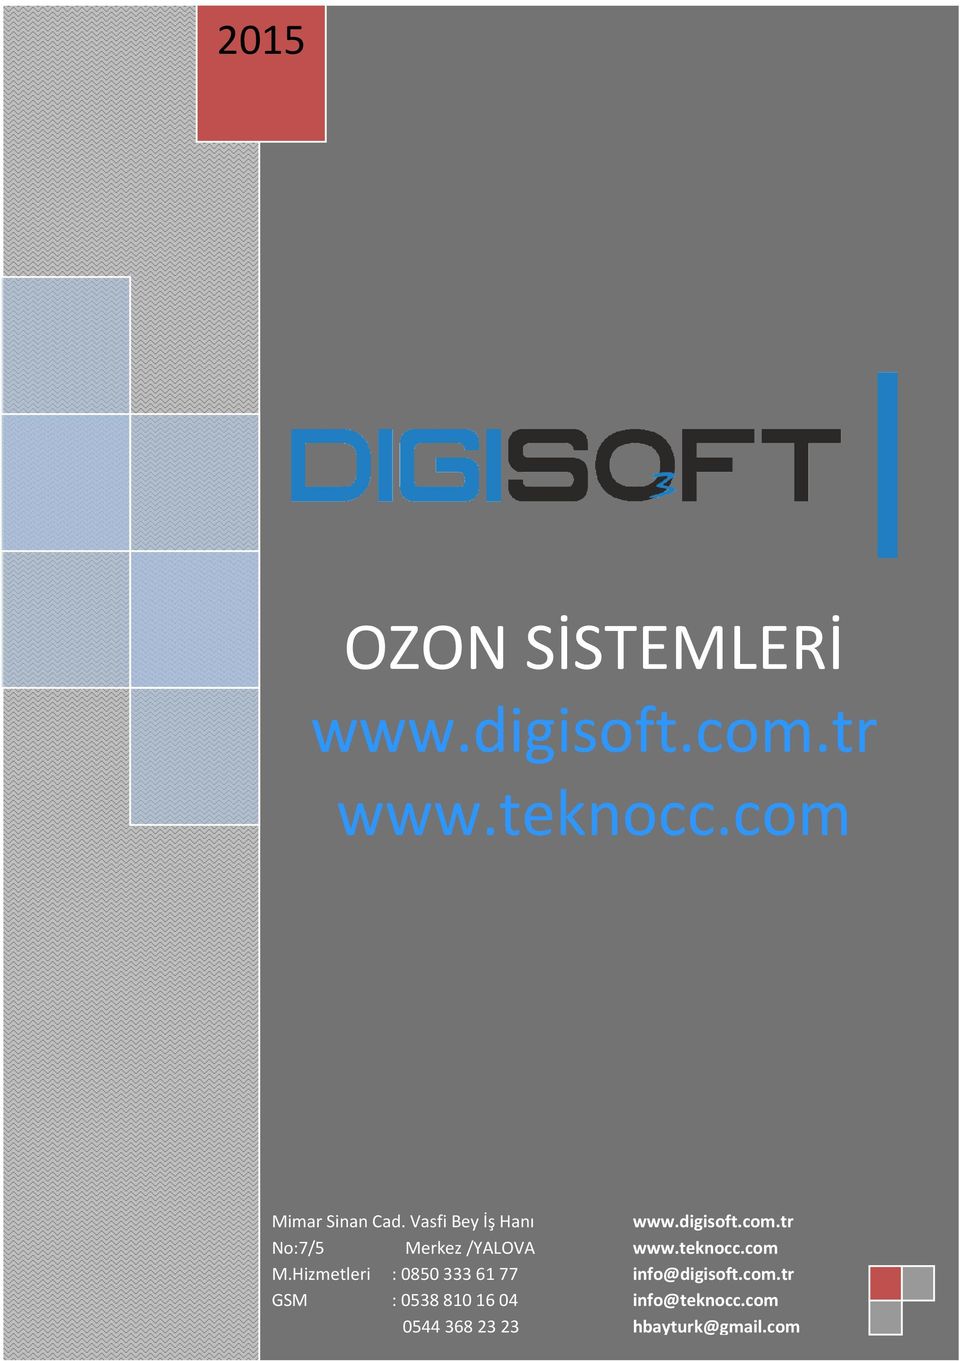 teknocc.com M.Hizmetleri : 08503336177 info@digisoft.com.tr GSM : 05388101604 info@teknocc.